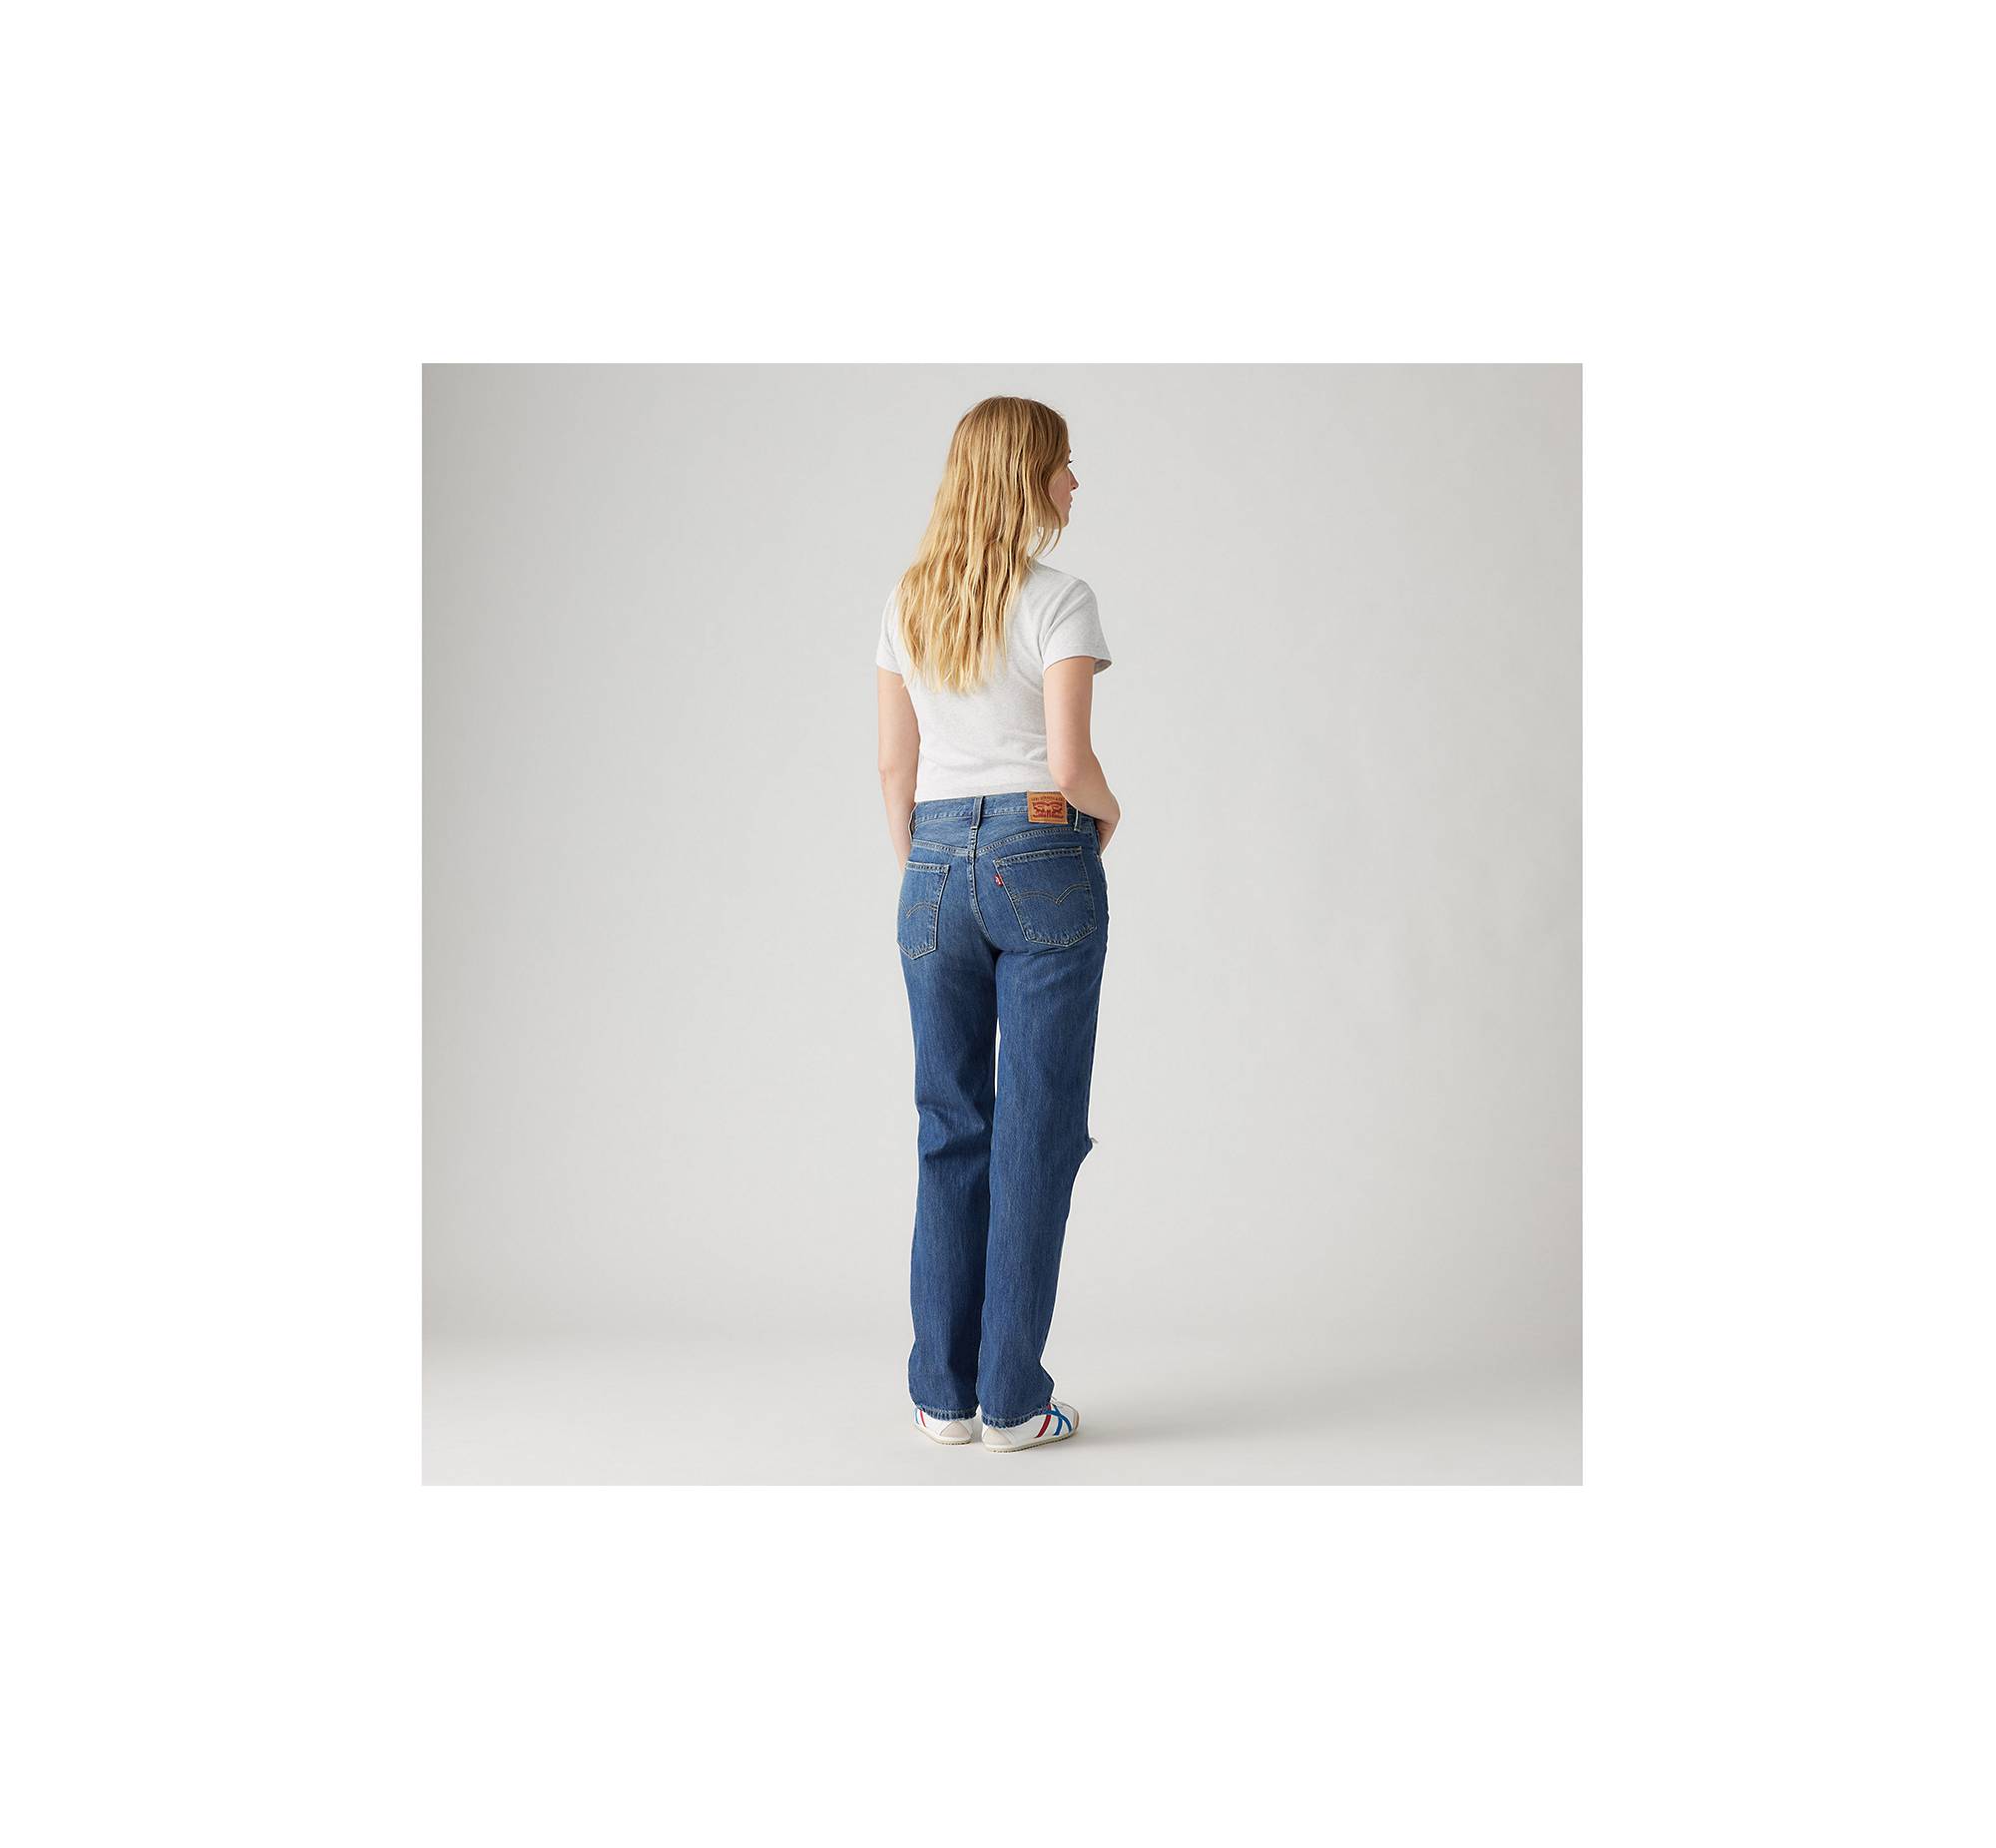 acerca de pasatiempo Lirio Low Pro Women's Jeans - Medium Wash | Levi's® US